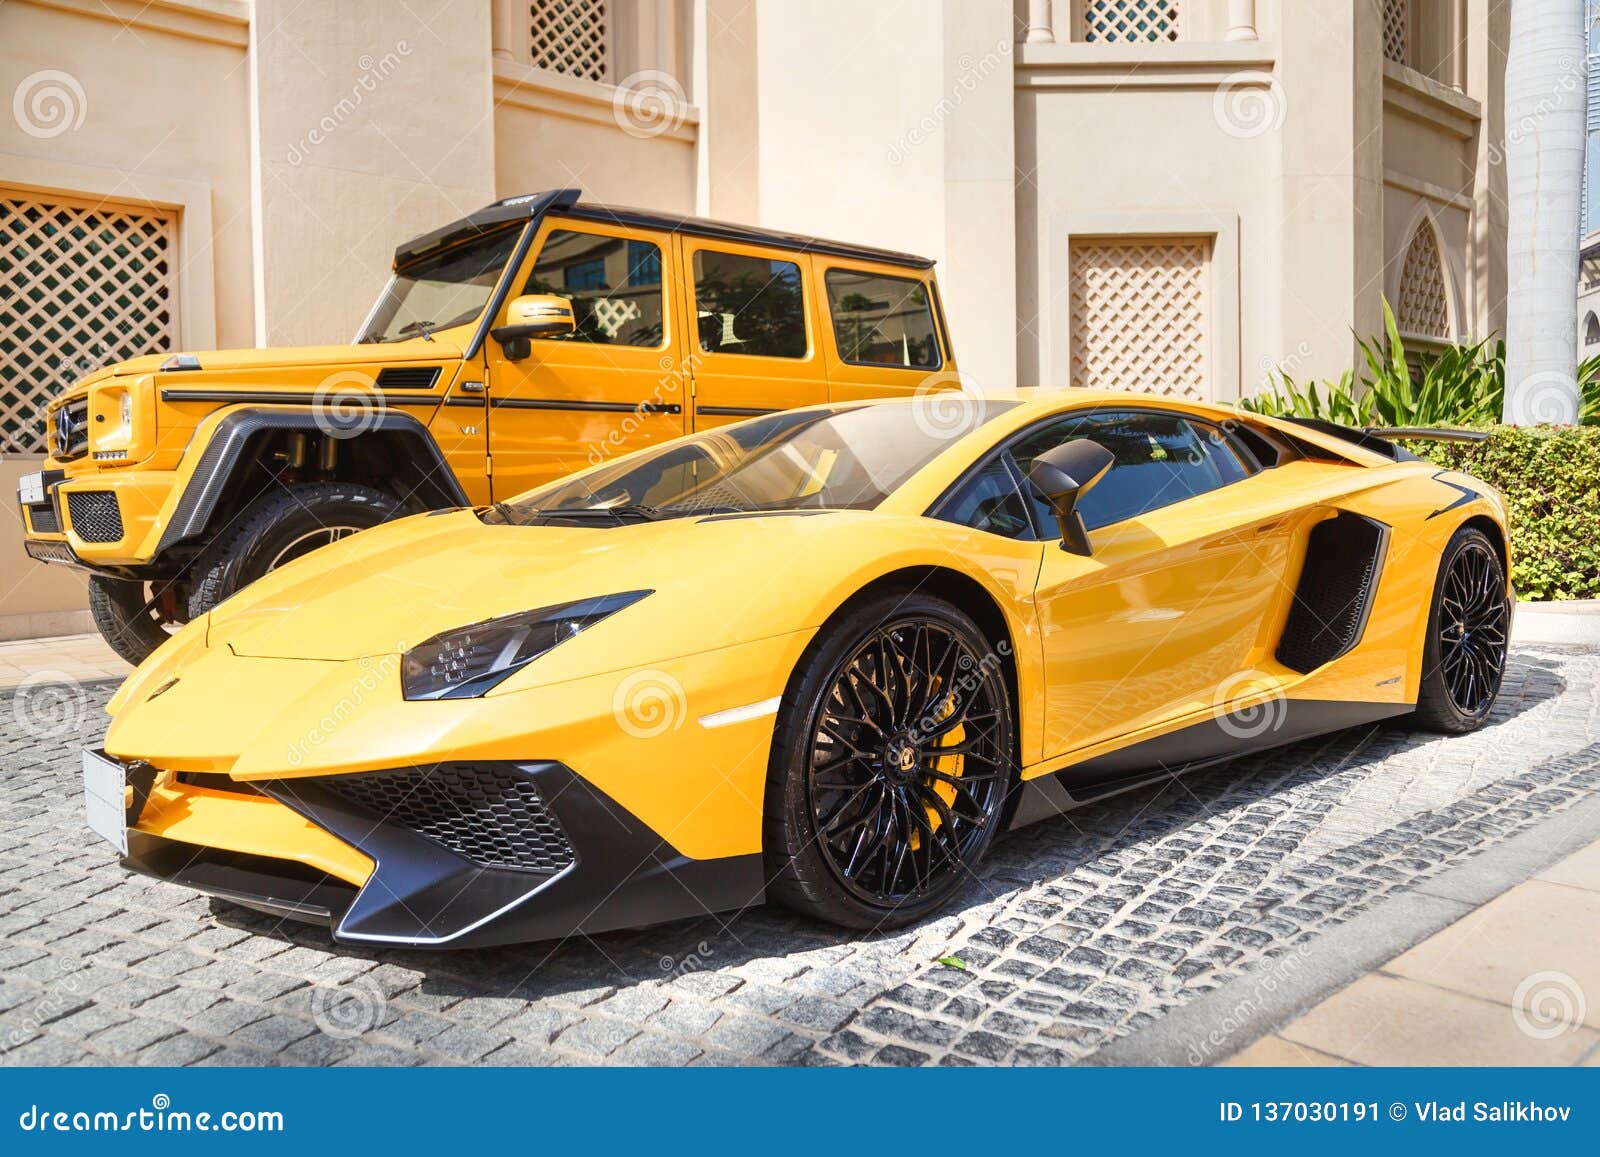 DUBAI, UAE - JANUARY 08, 2019: Yellow Luxury Supercar Lamborghini Aventador  Roadster and Gelandewagen in Dubai Editorial Photo - Image of expensive,  lamborghini: 137030191